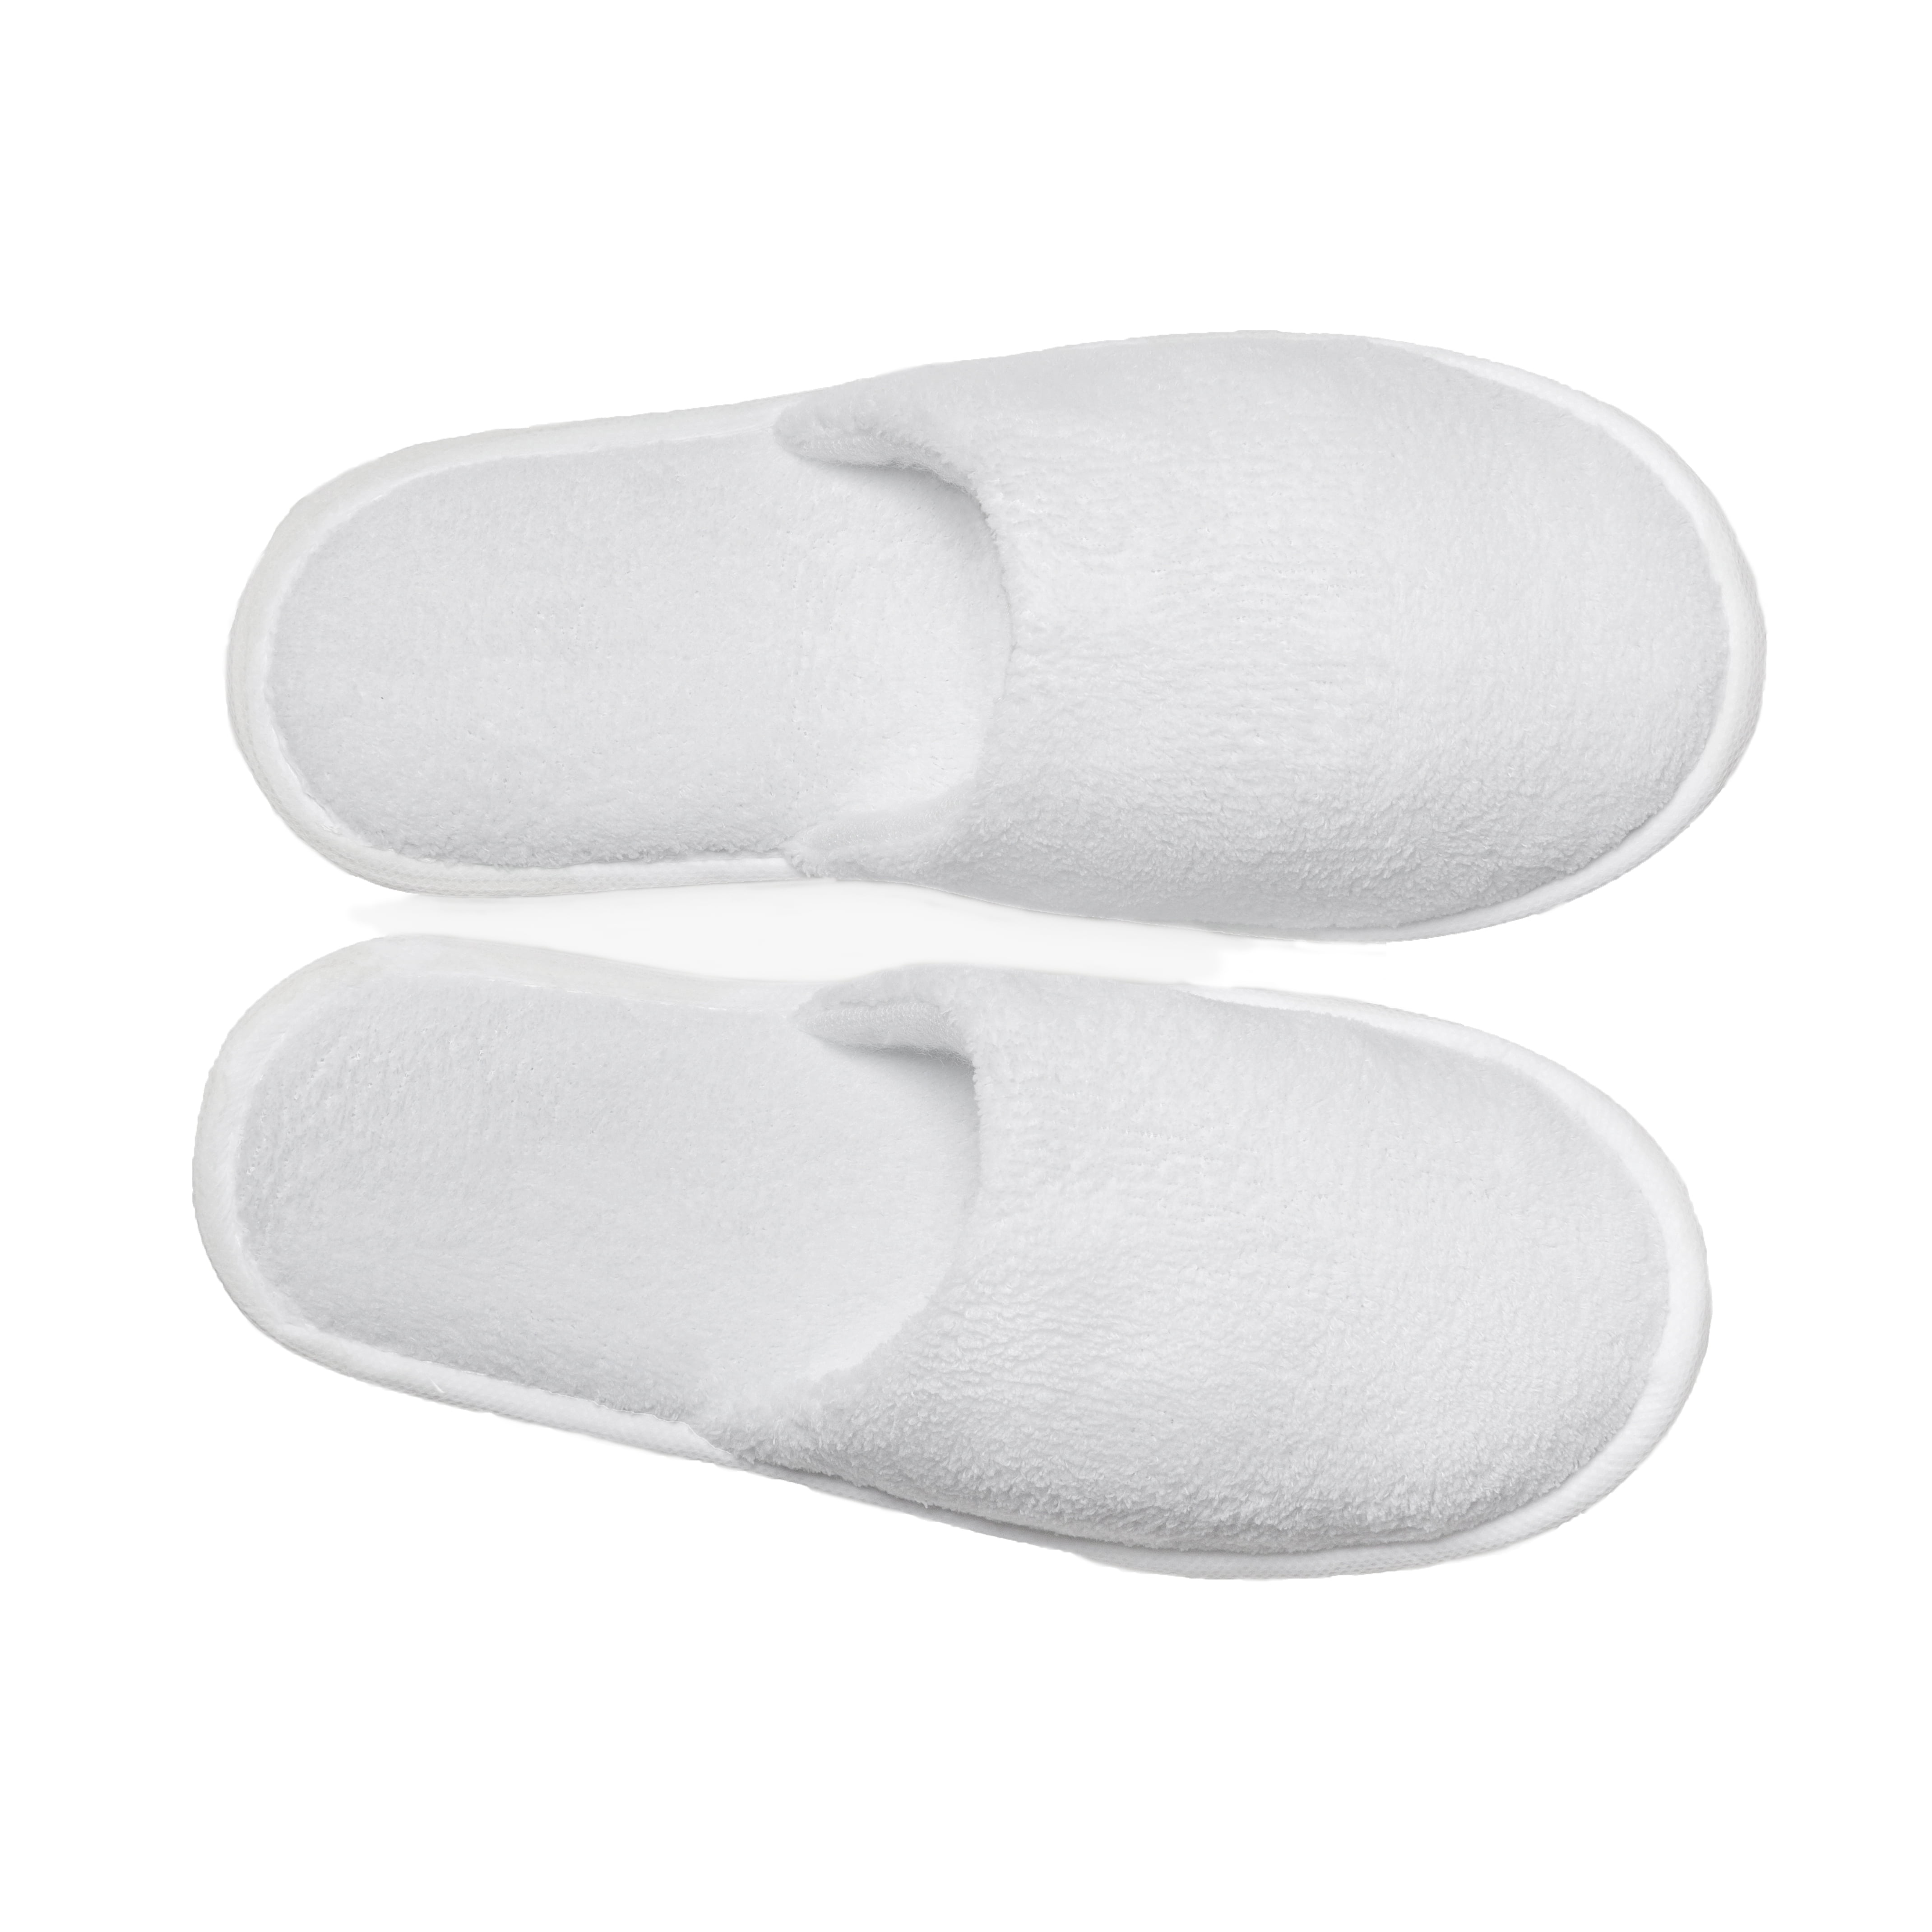 White Closed Toe Adult Fleece Warm Slippers - 6 pack - Walmart.com